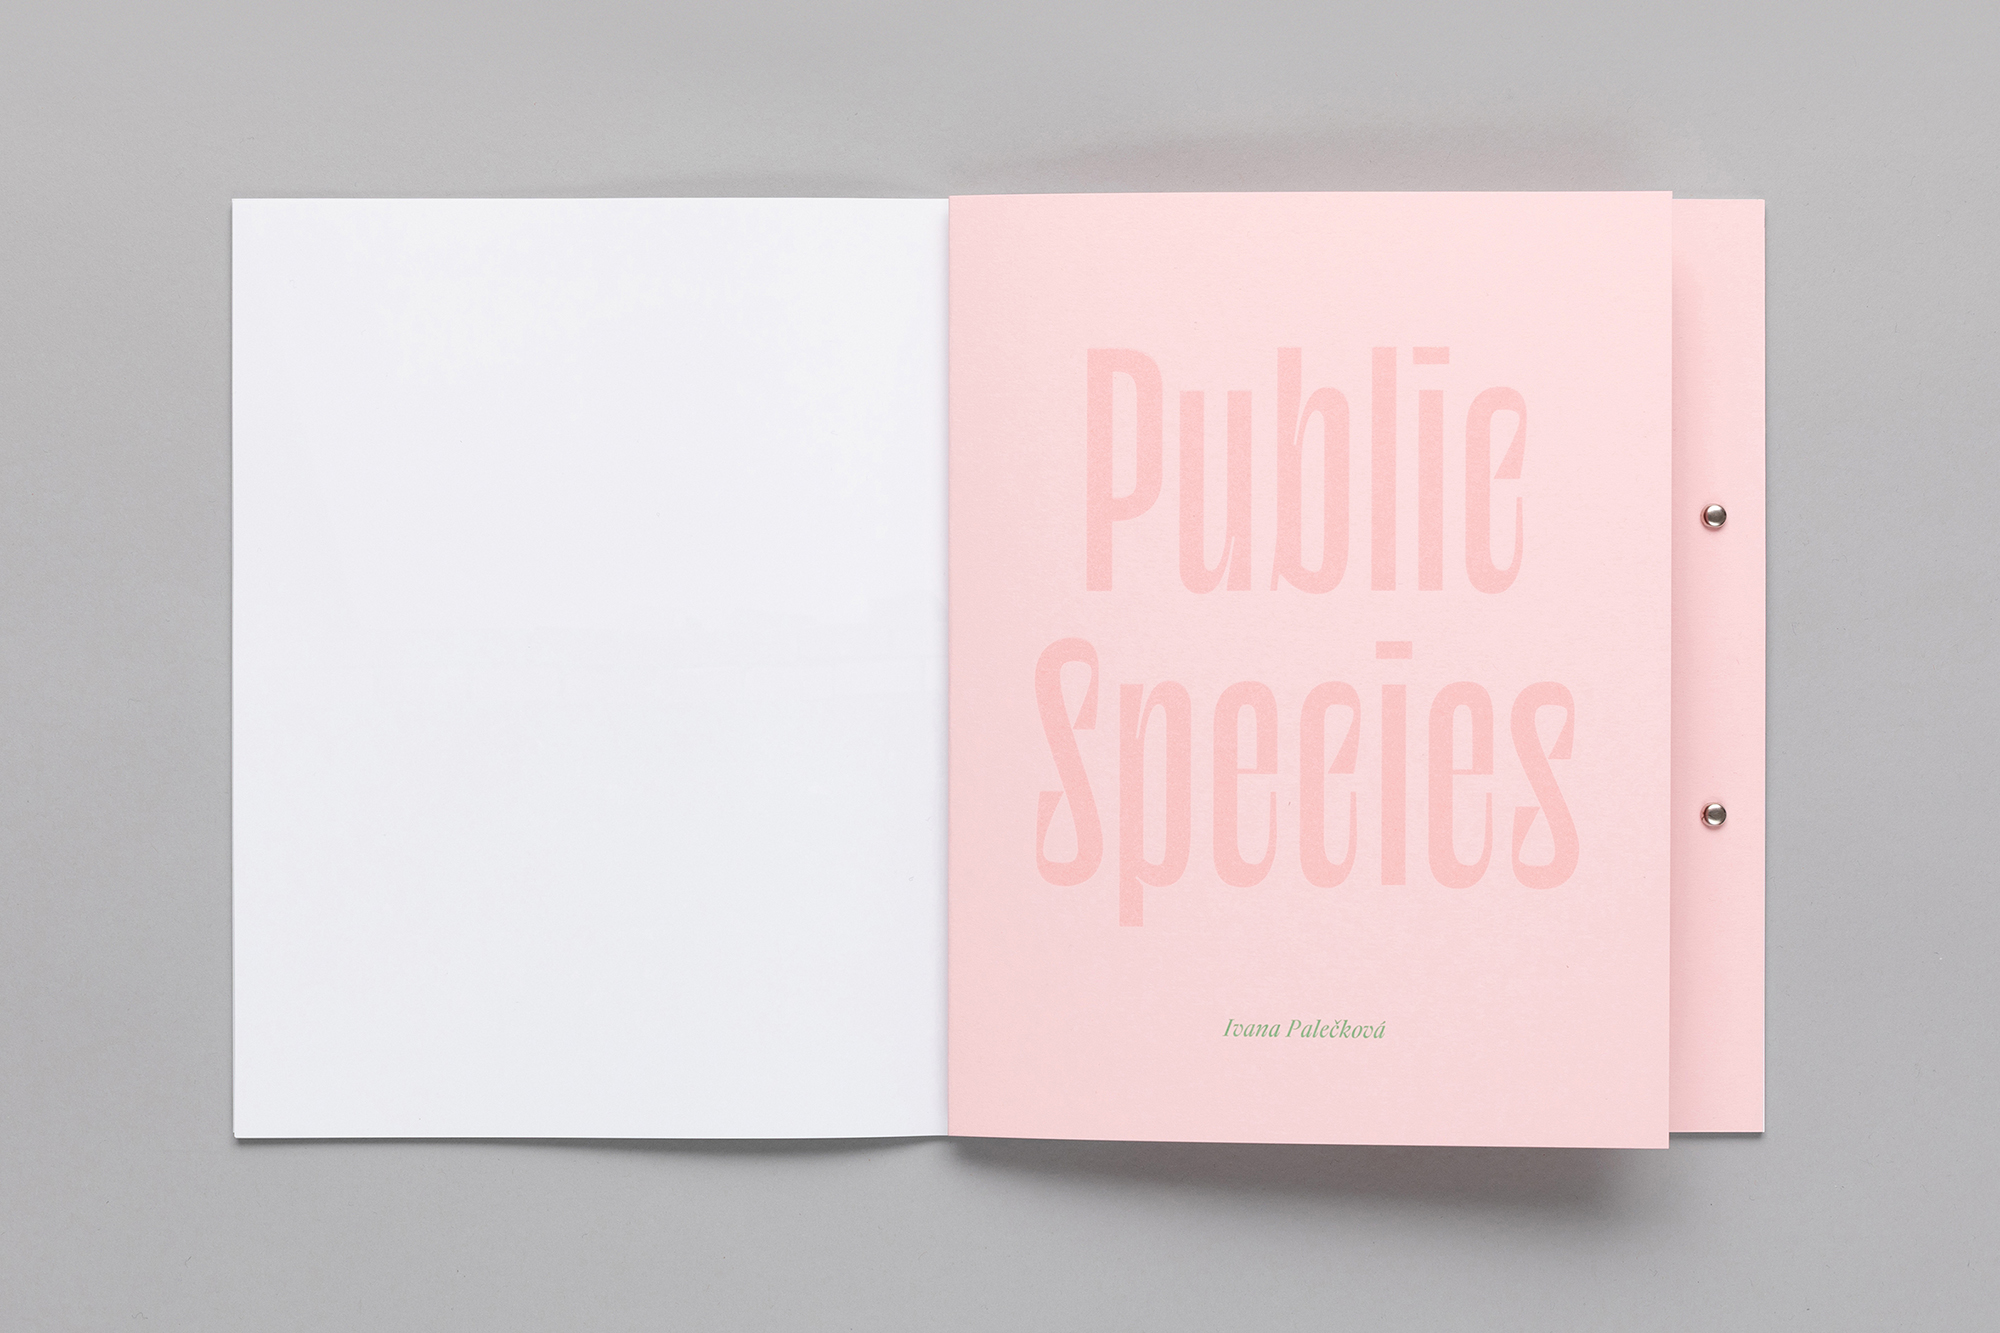 Public Species